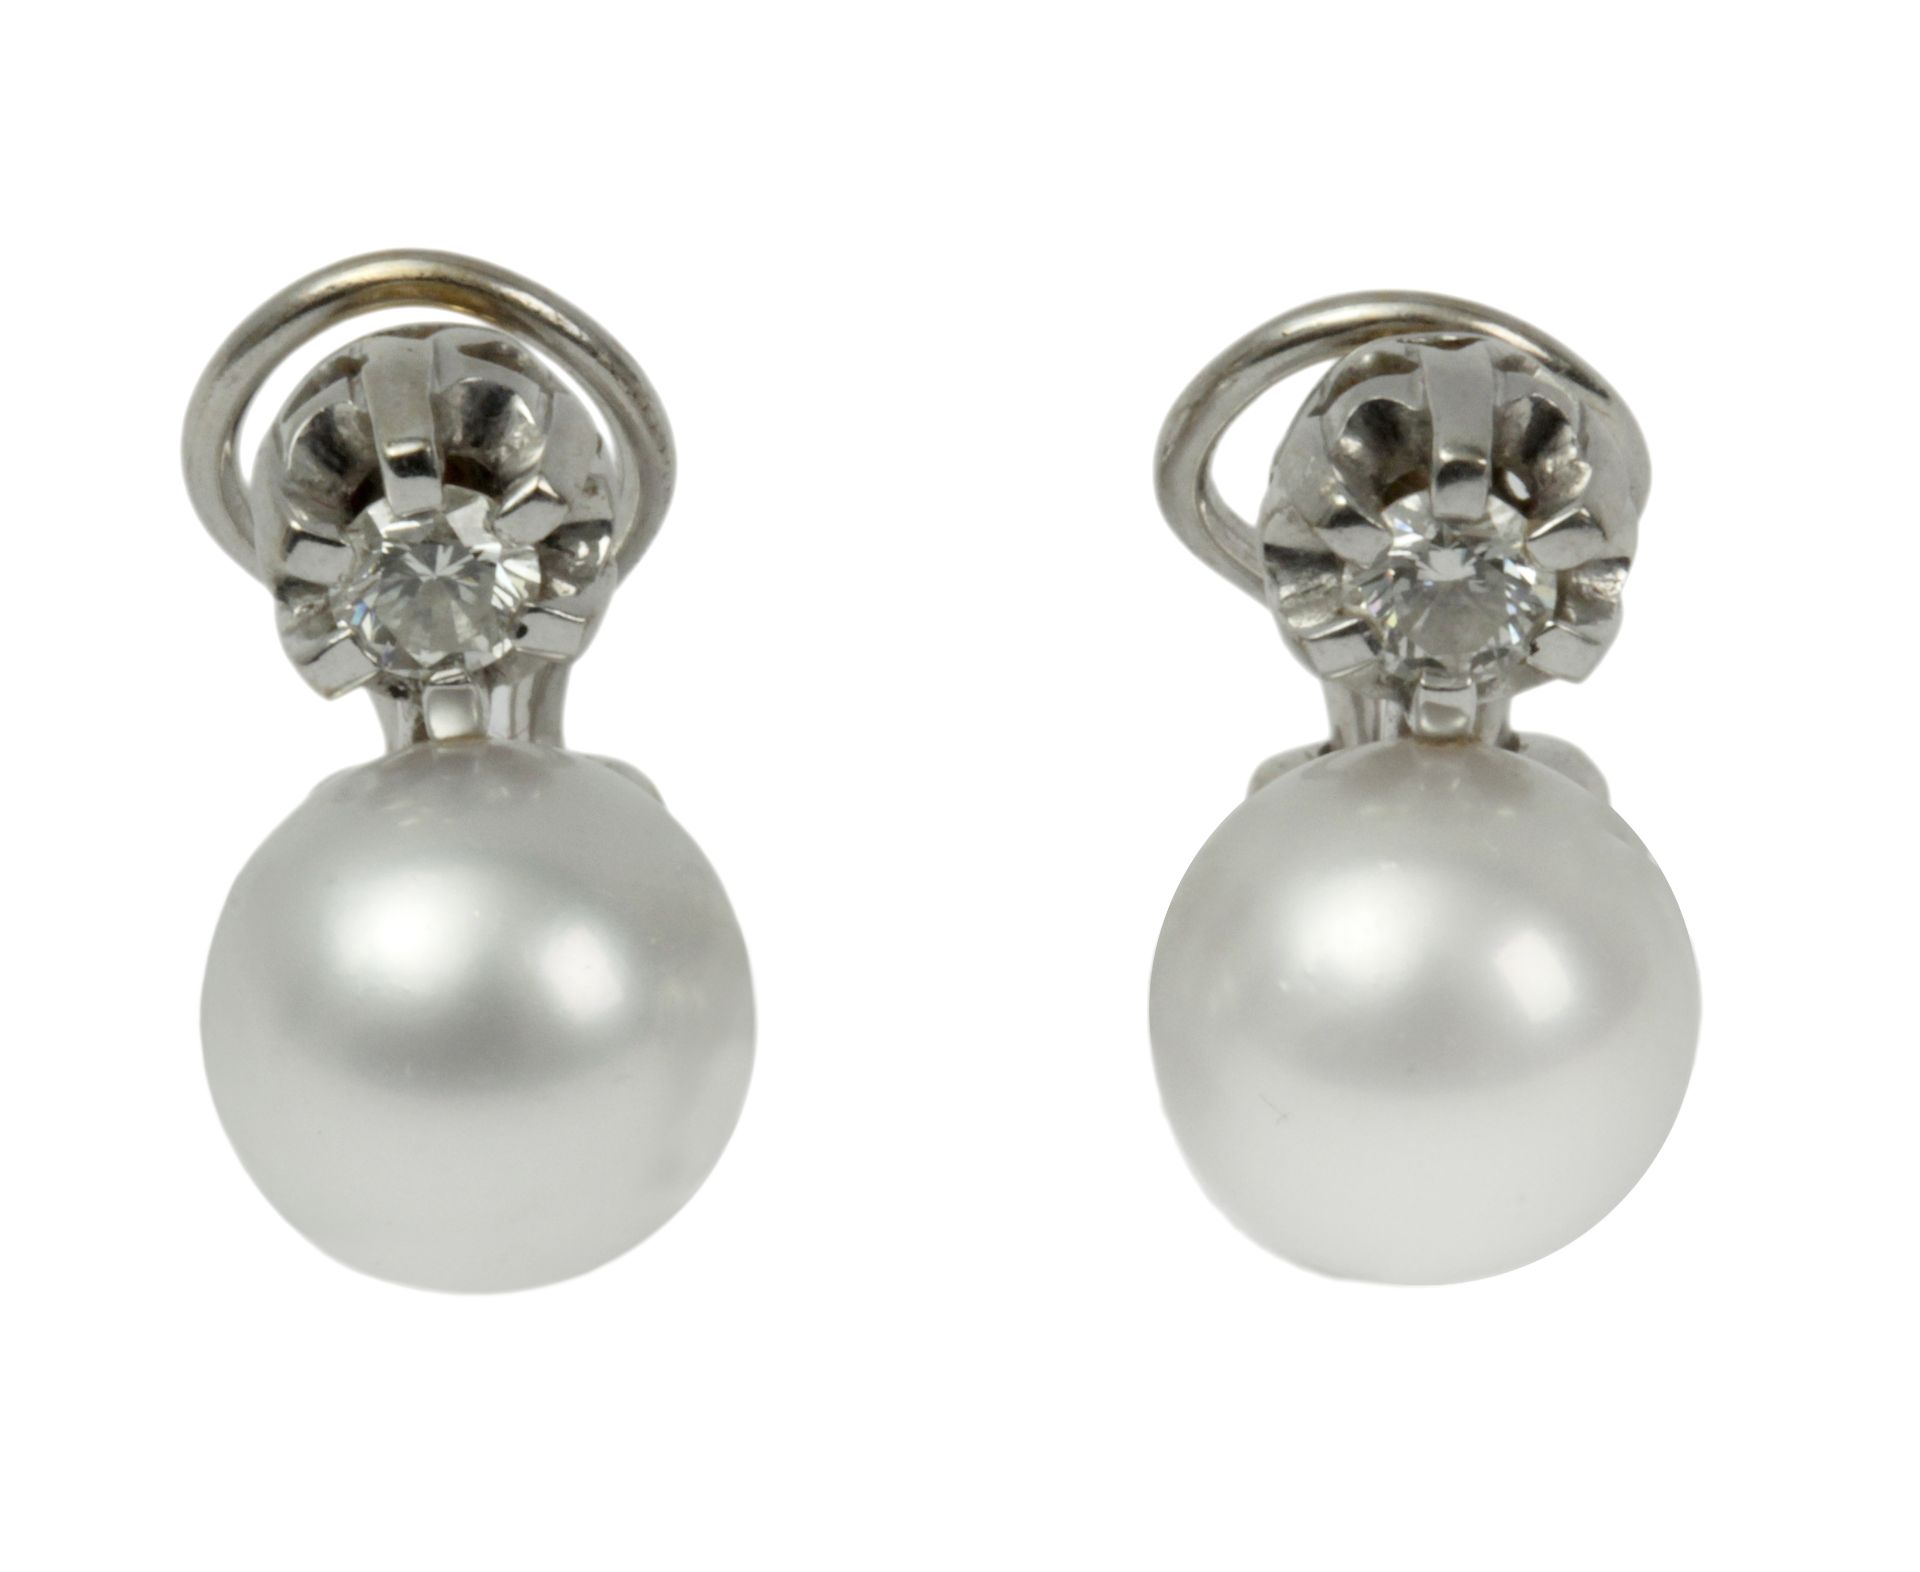 Toi et moi' earrings in 18k. white gold, brilliant cut diamonds and Australian pearls